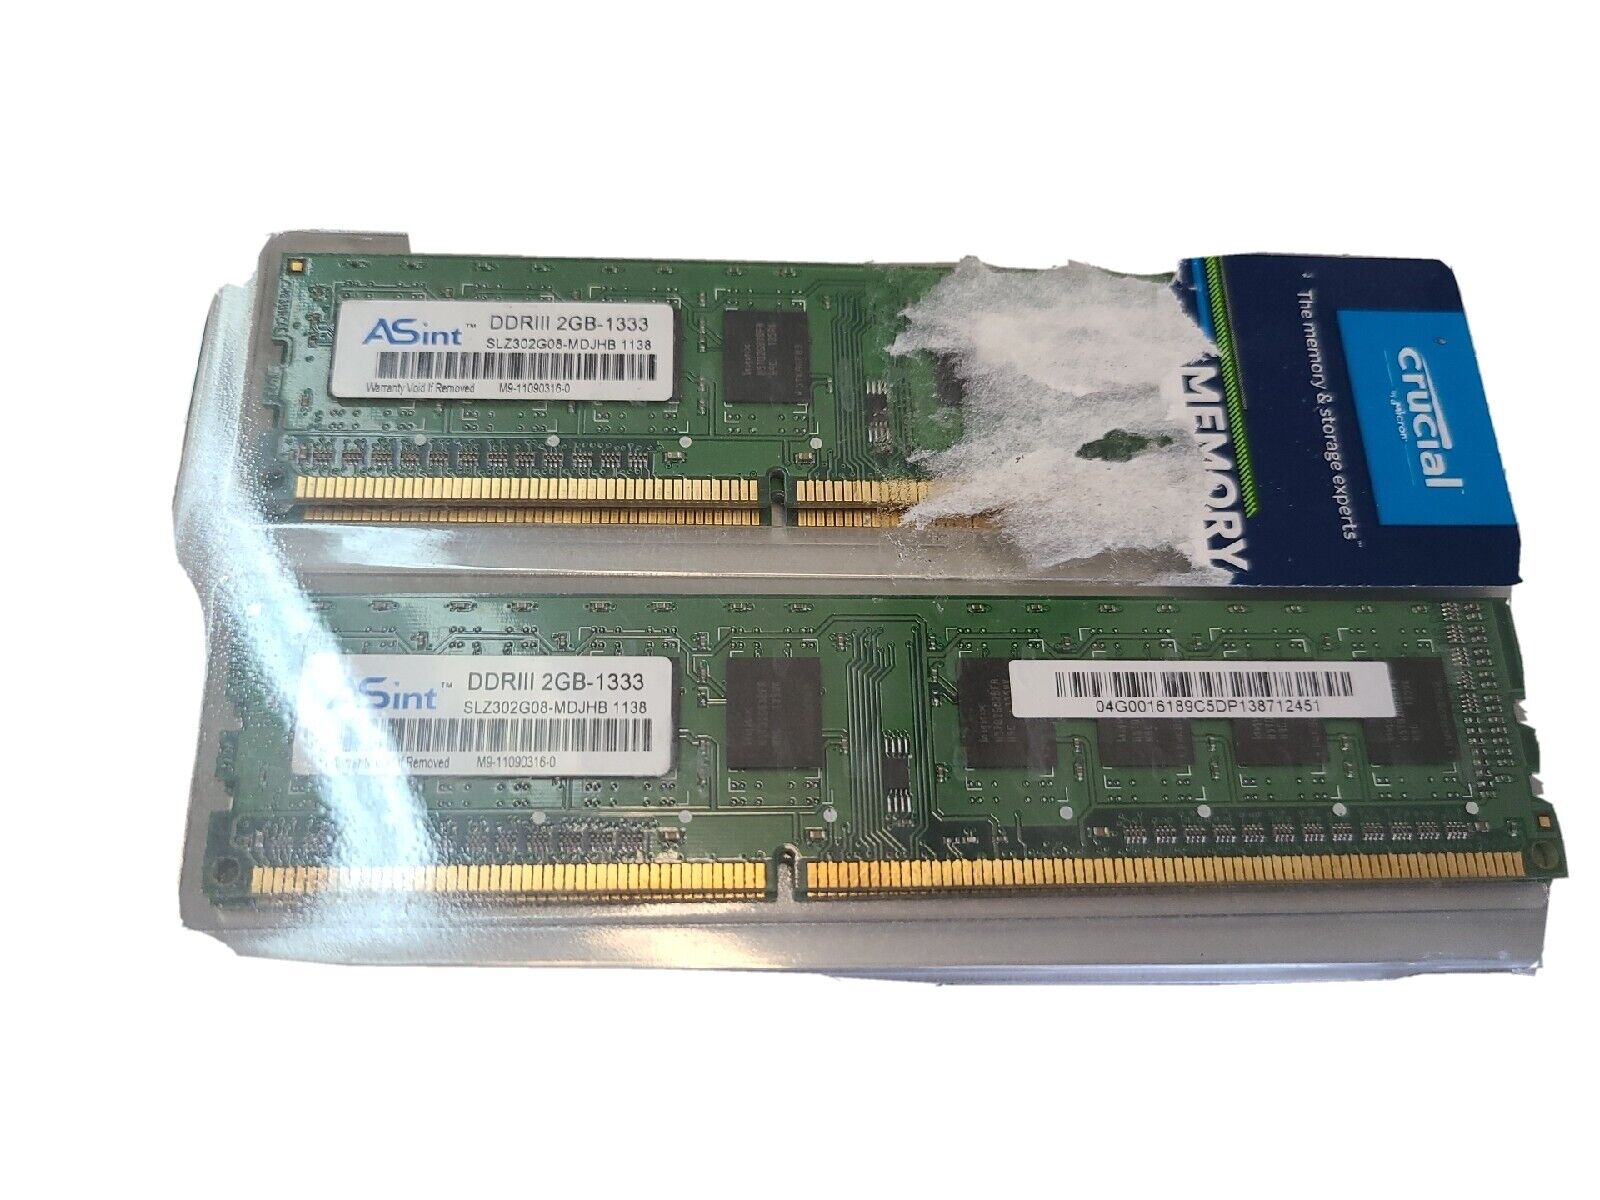 ASint DDRIII 2GB-1333 SLZ302G08-MDJHB Memory RAM